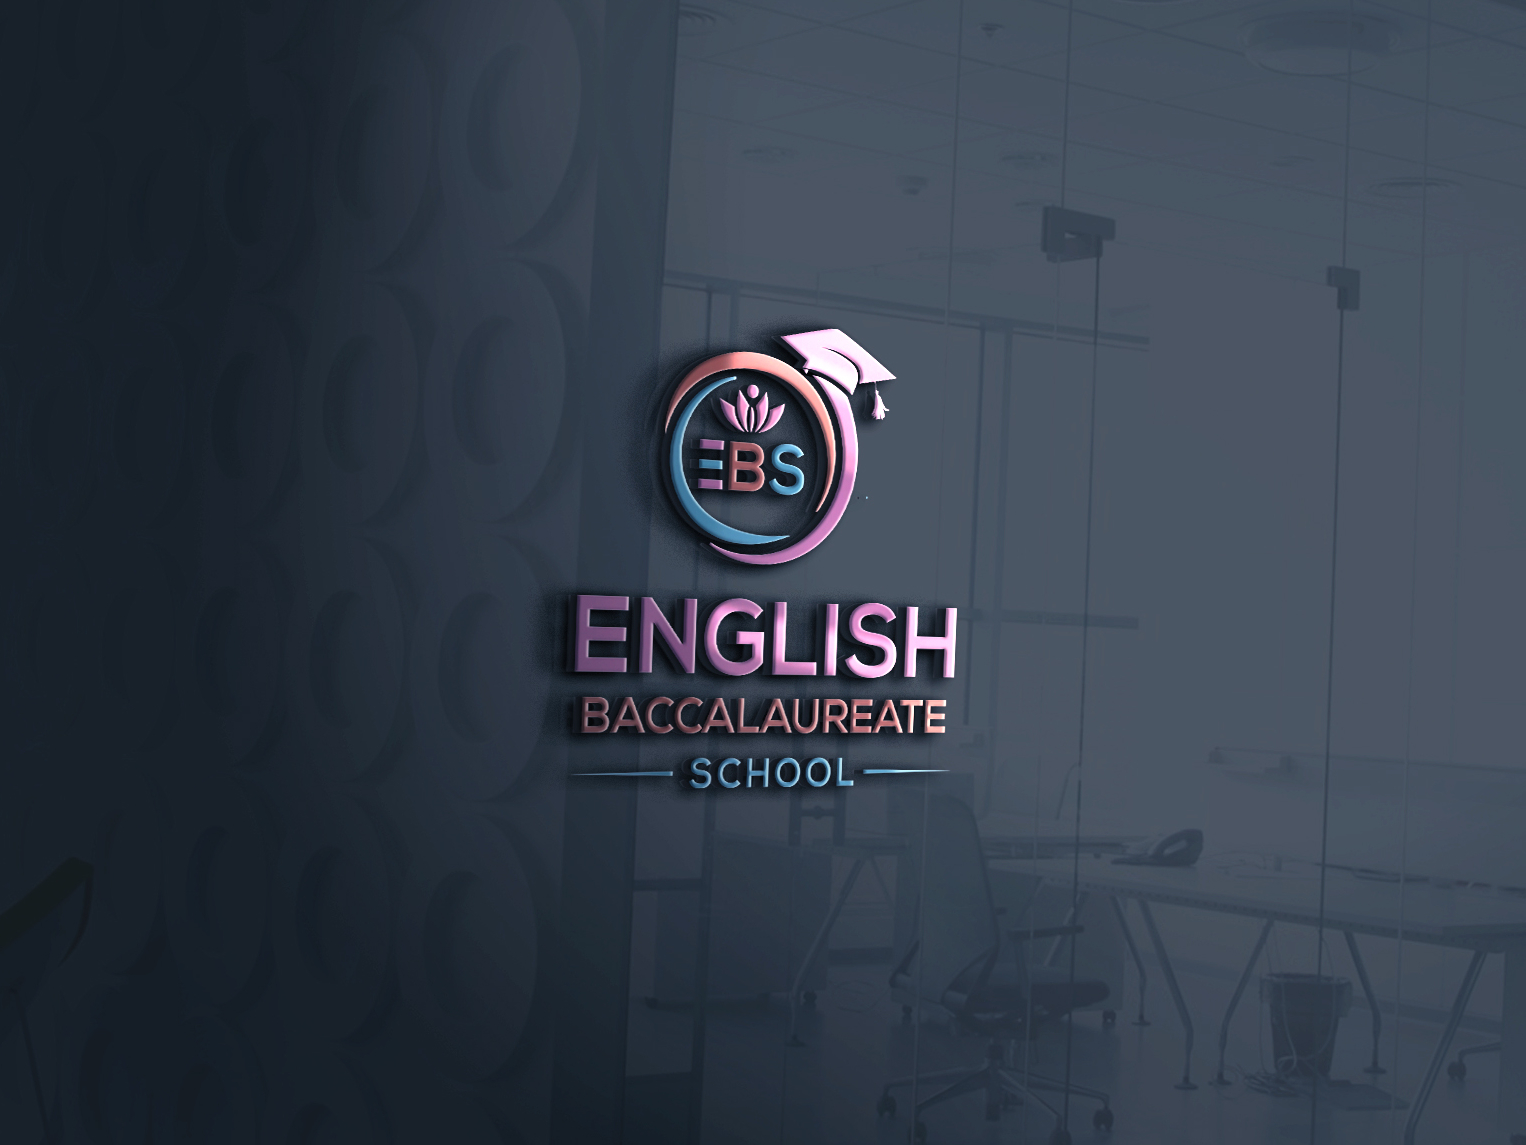 English Baccalaureate school logo by Prosenjit Paul on Dribbble